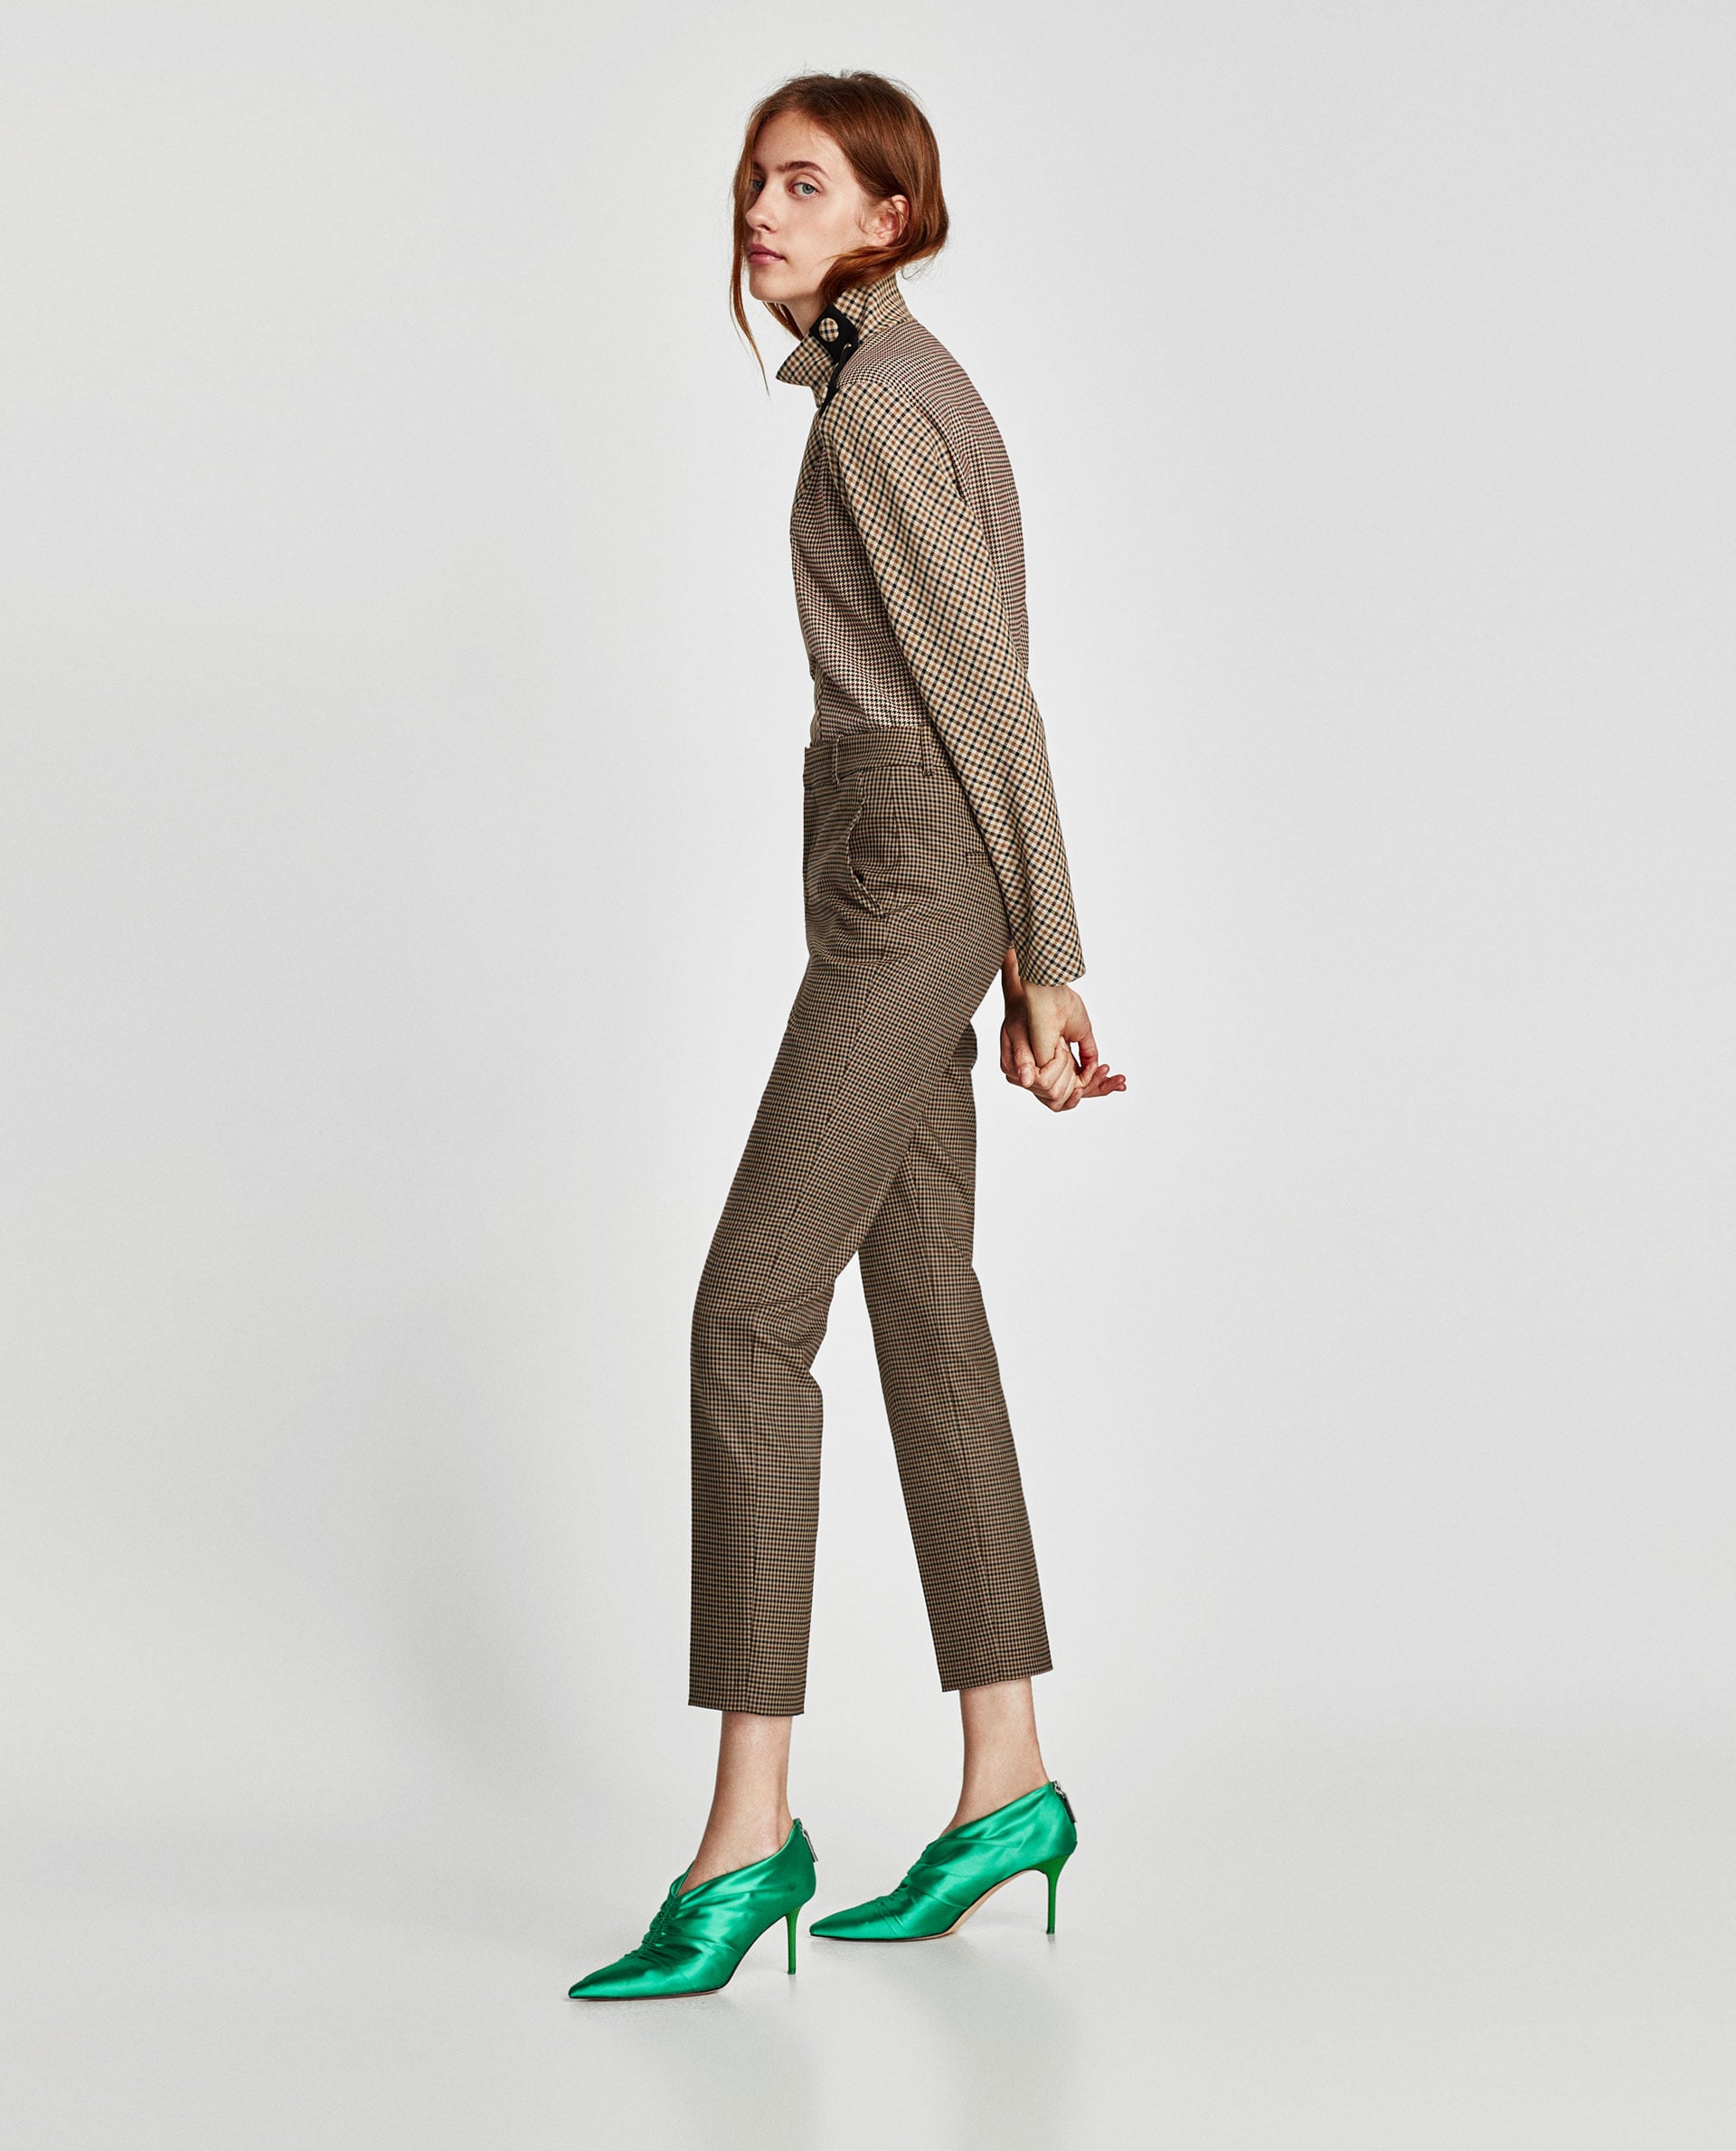 ANN2493 ZARA M size plaid trousers Zara basic checkered slim fit pants  Womens Fashion Bottoms Other Bottoms on Carousell